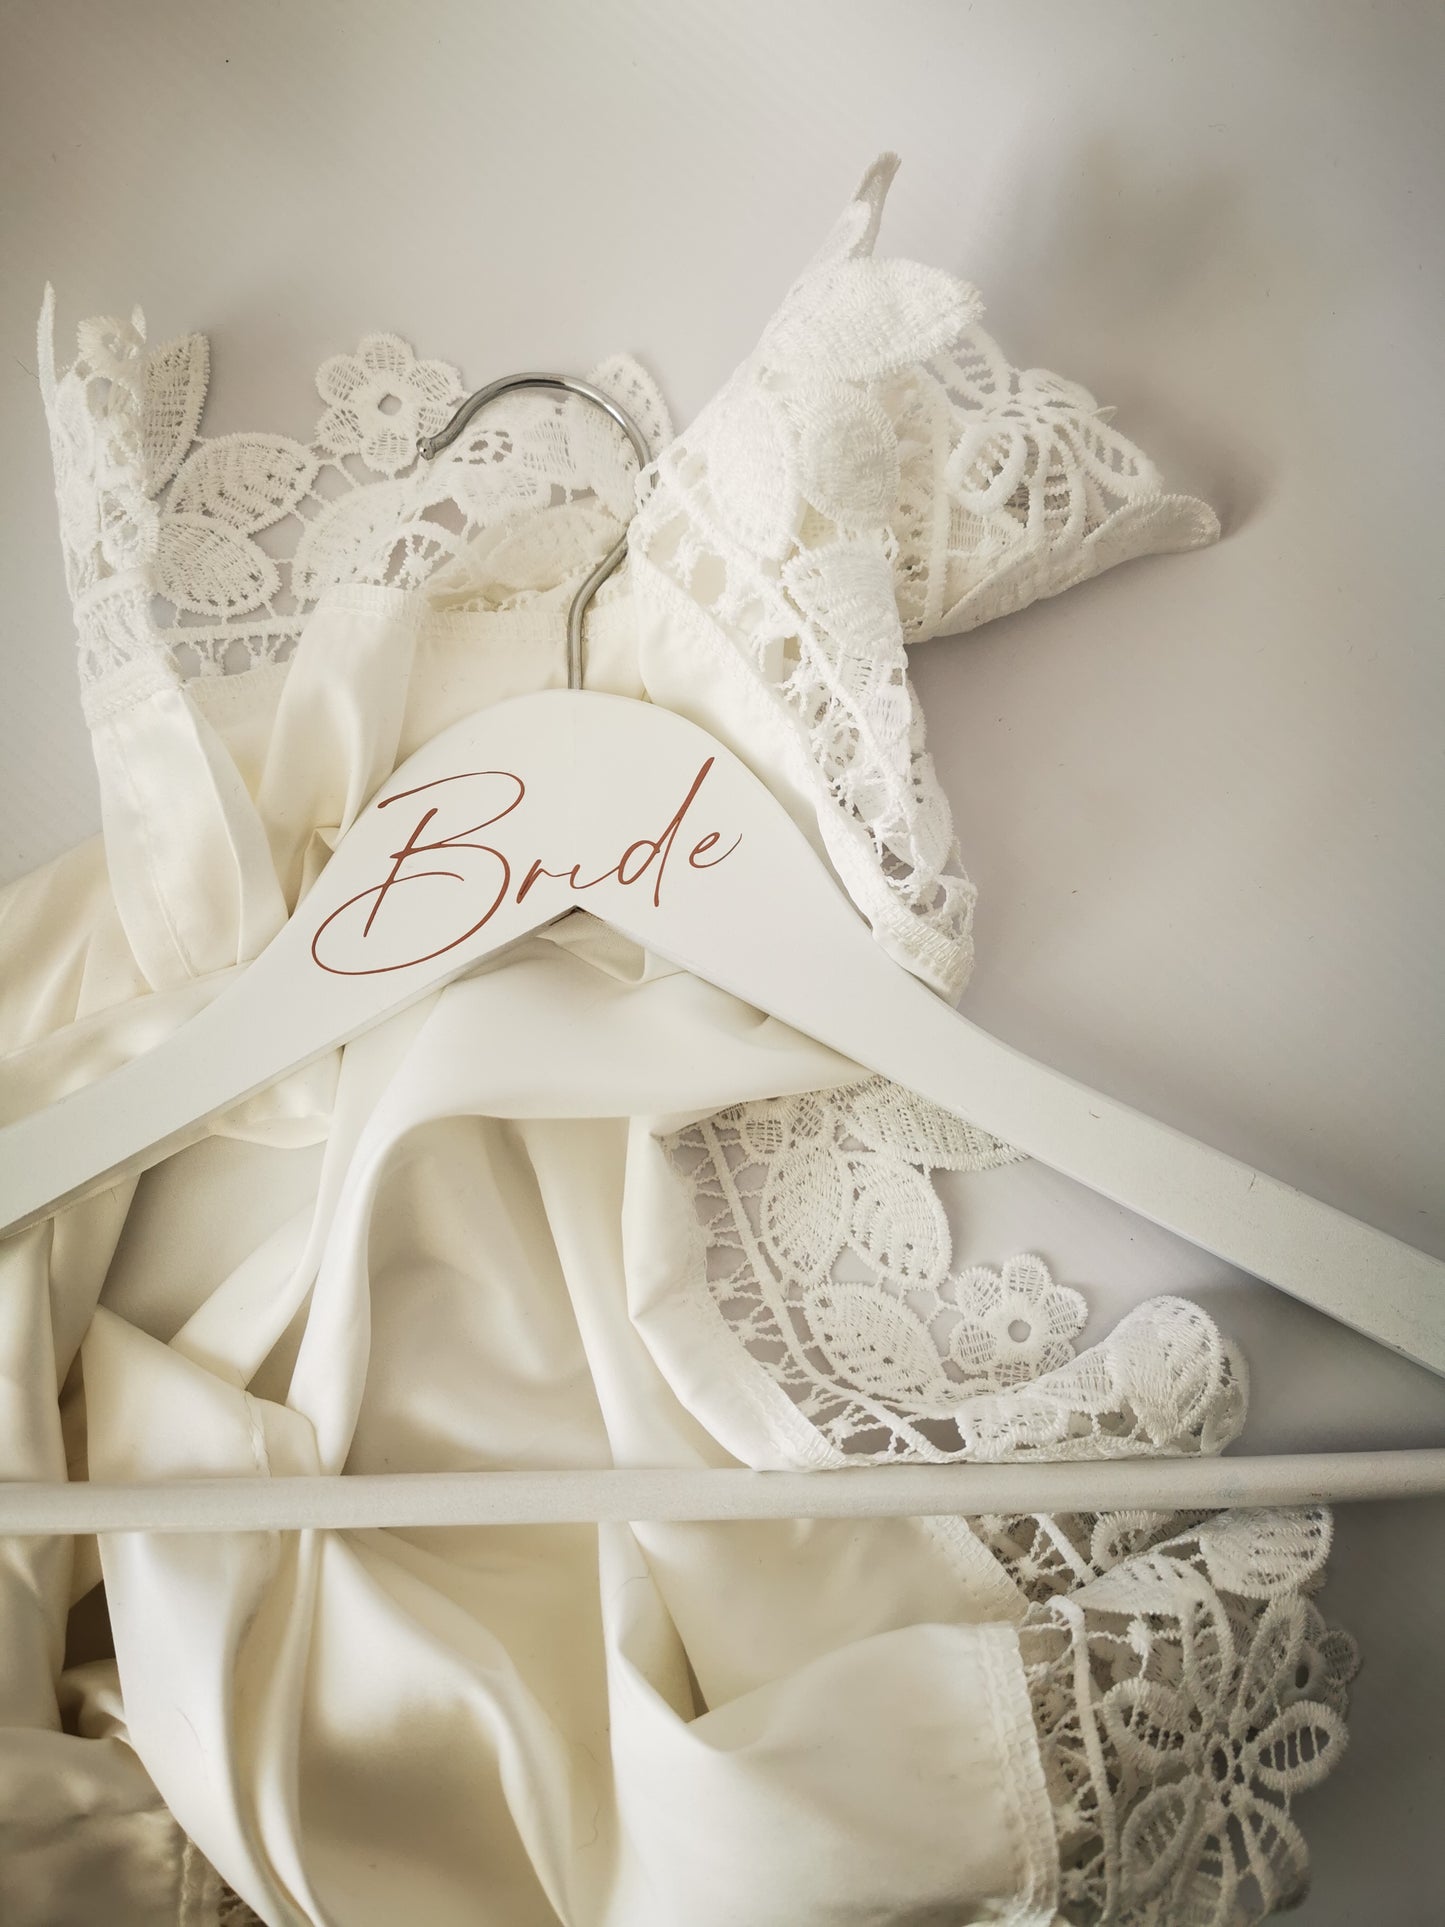 Personalised wedding hangers